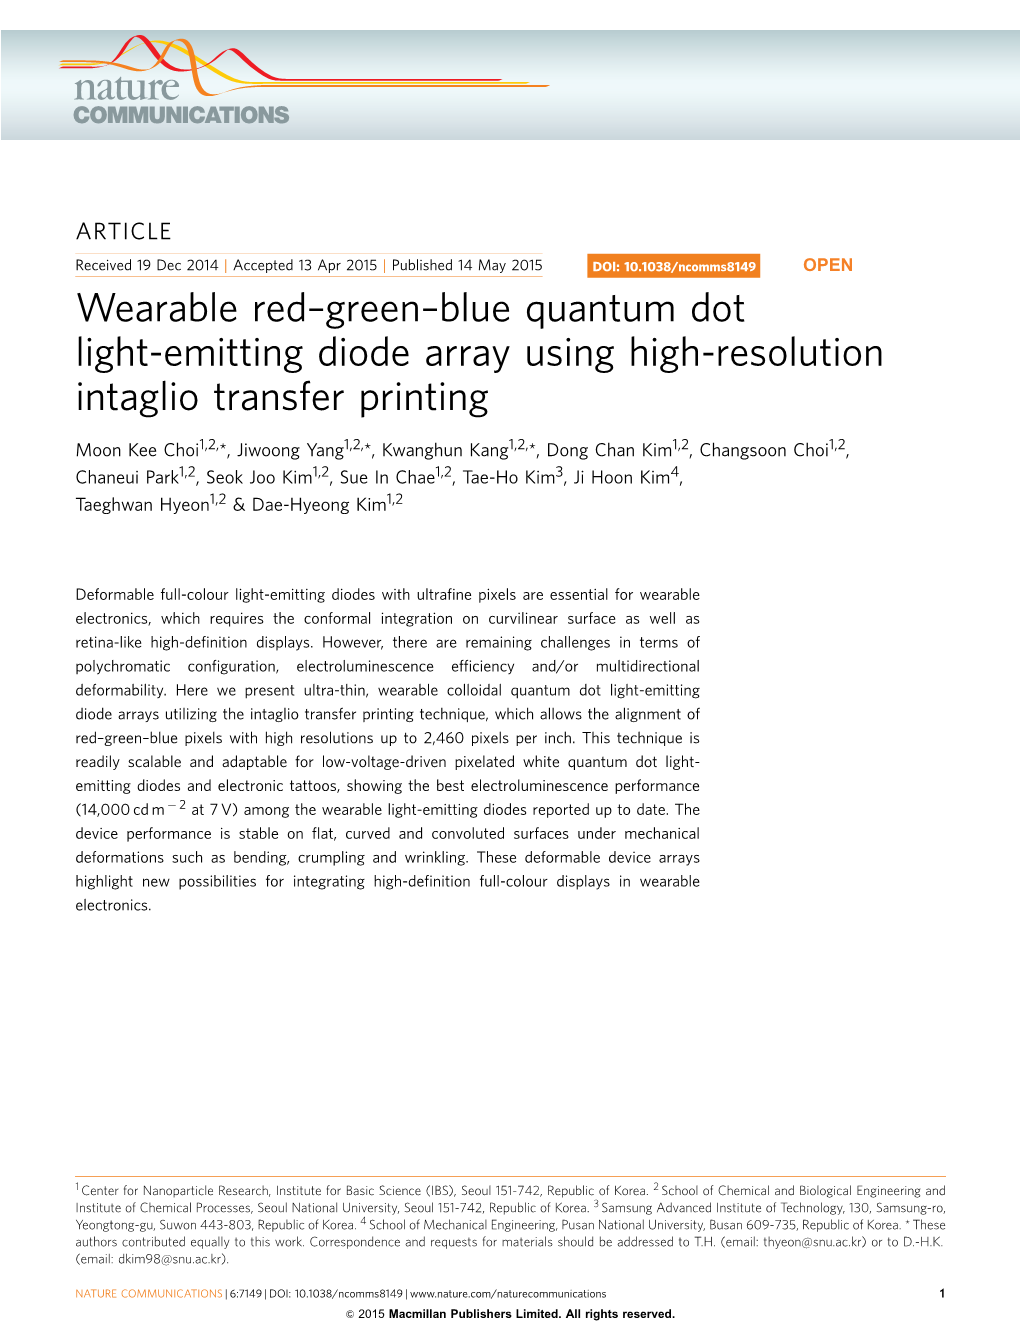 Blue Quantum Dot Light-Emitting Diode Array Using High-Resolution Intaglio Transfer Printing